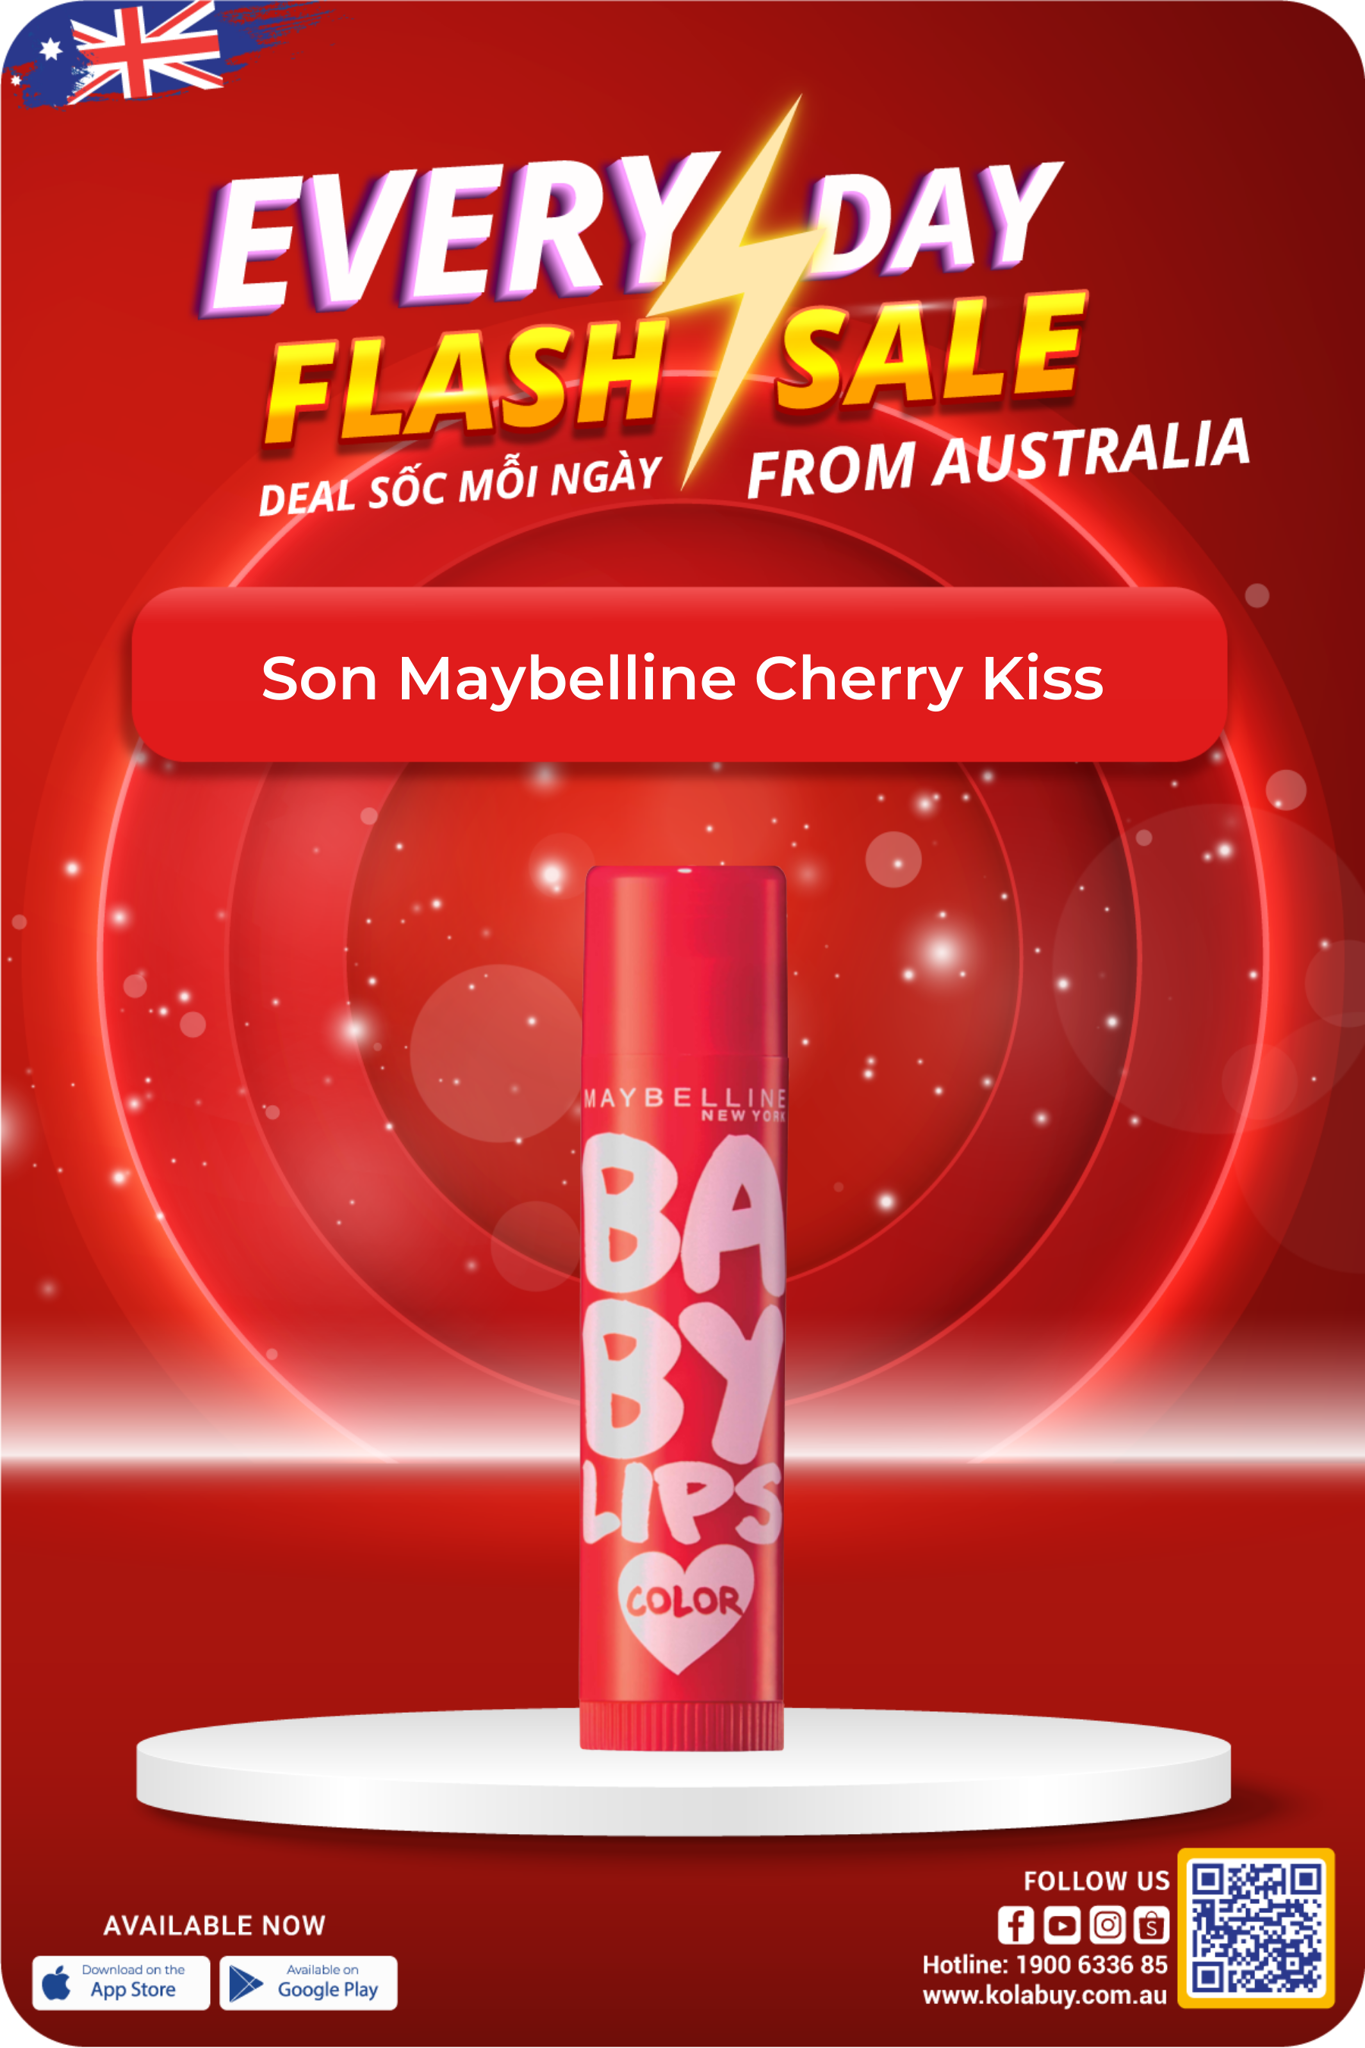 Son Maybelline Cherry Kiss